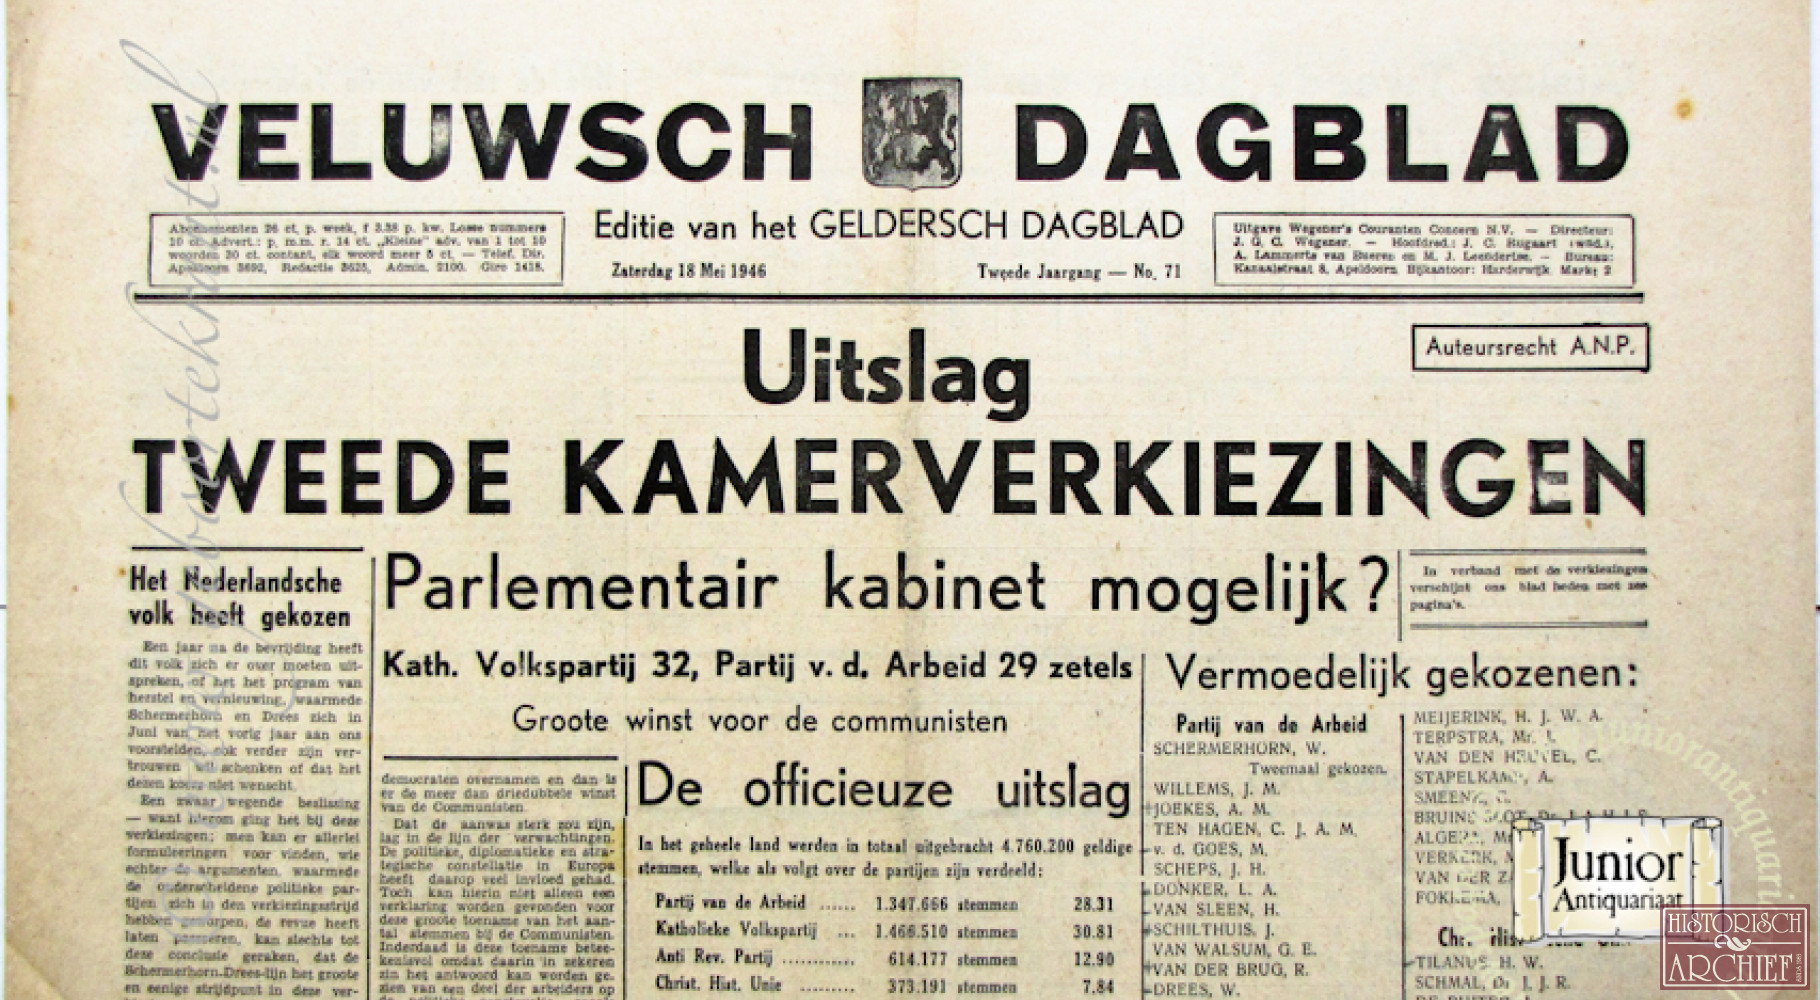 Veluwsch Dagblad